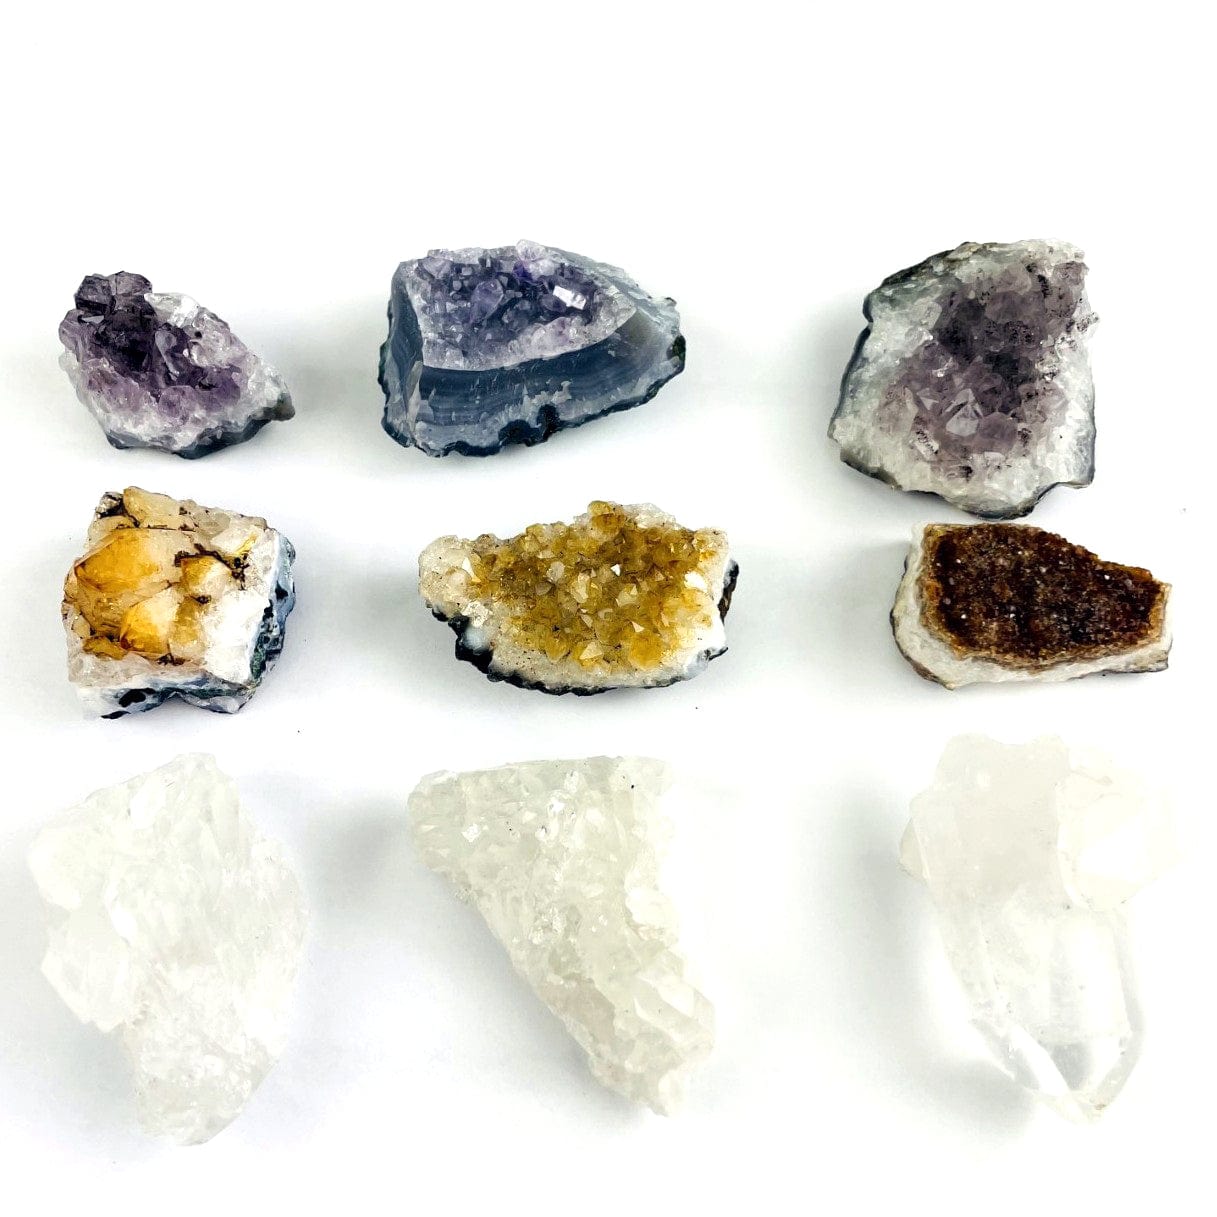 triple energy set made up of crystal quartz, heat treated citrine and amethyst